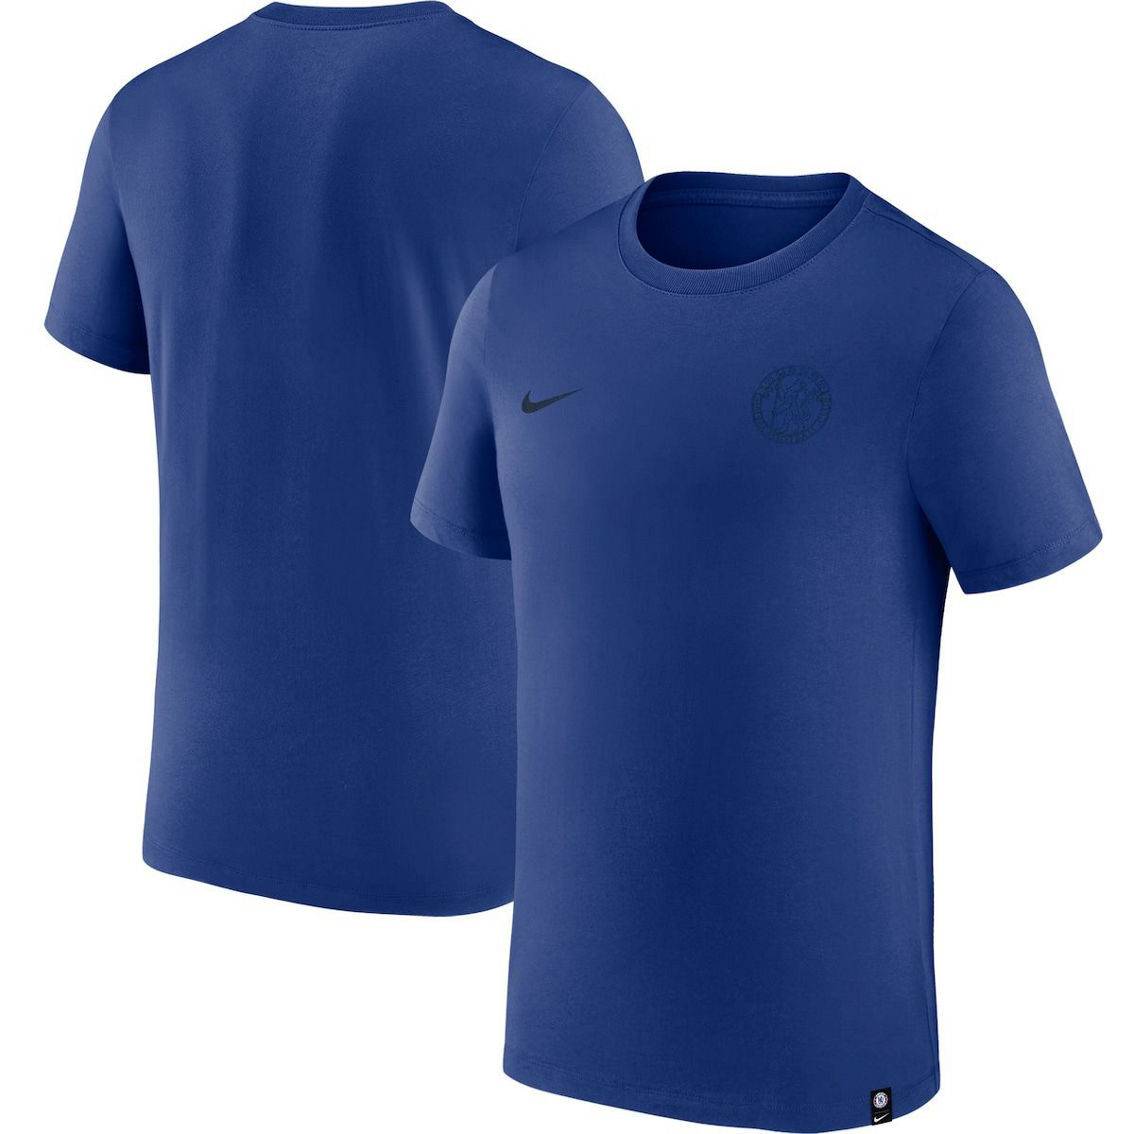 Nike Men's Blue Chelsea Voice T-Shirt - Image 2 of 4